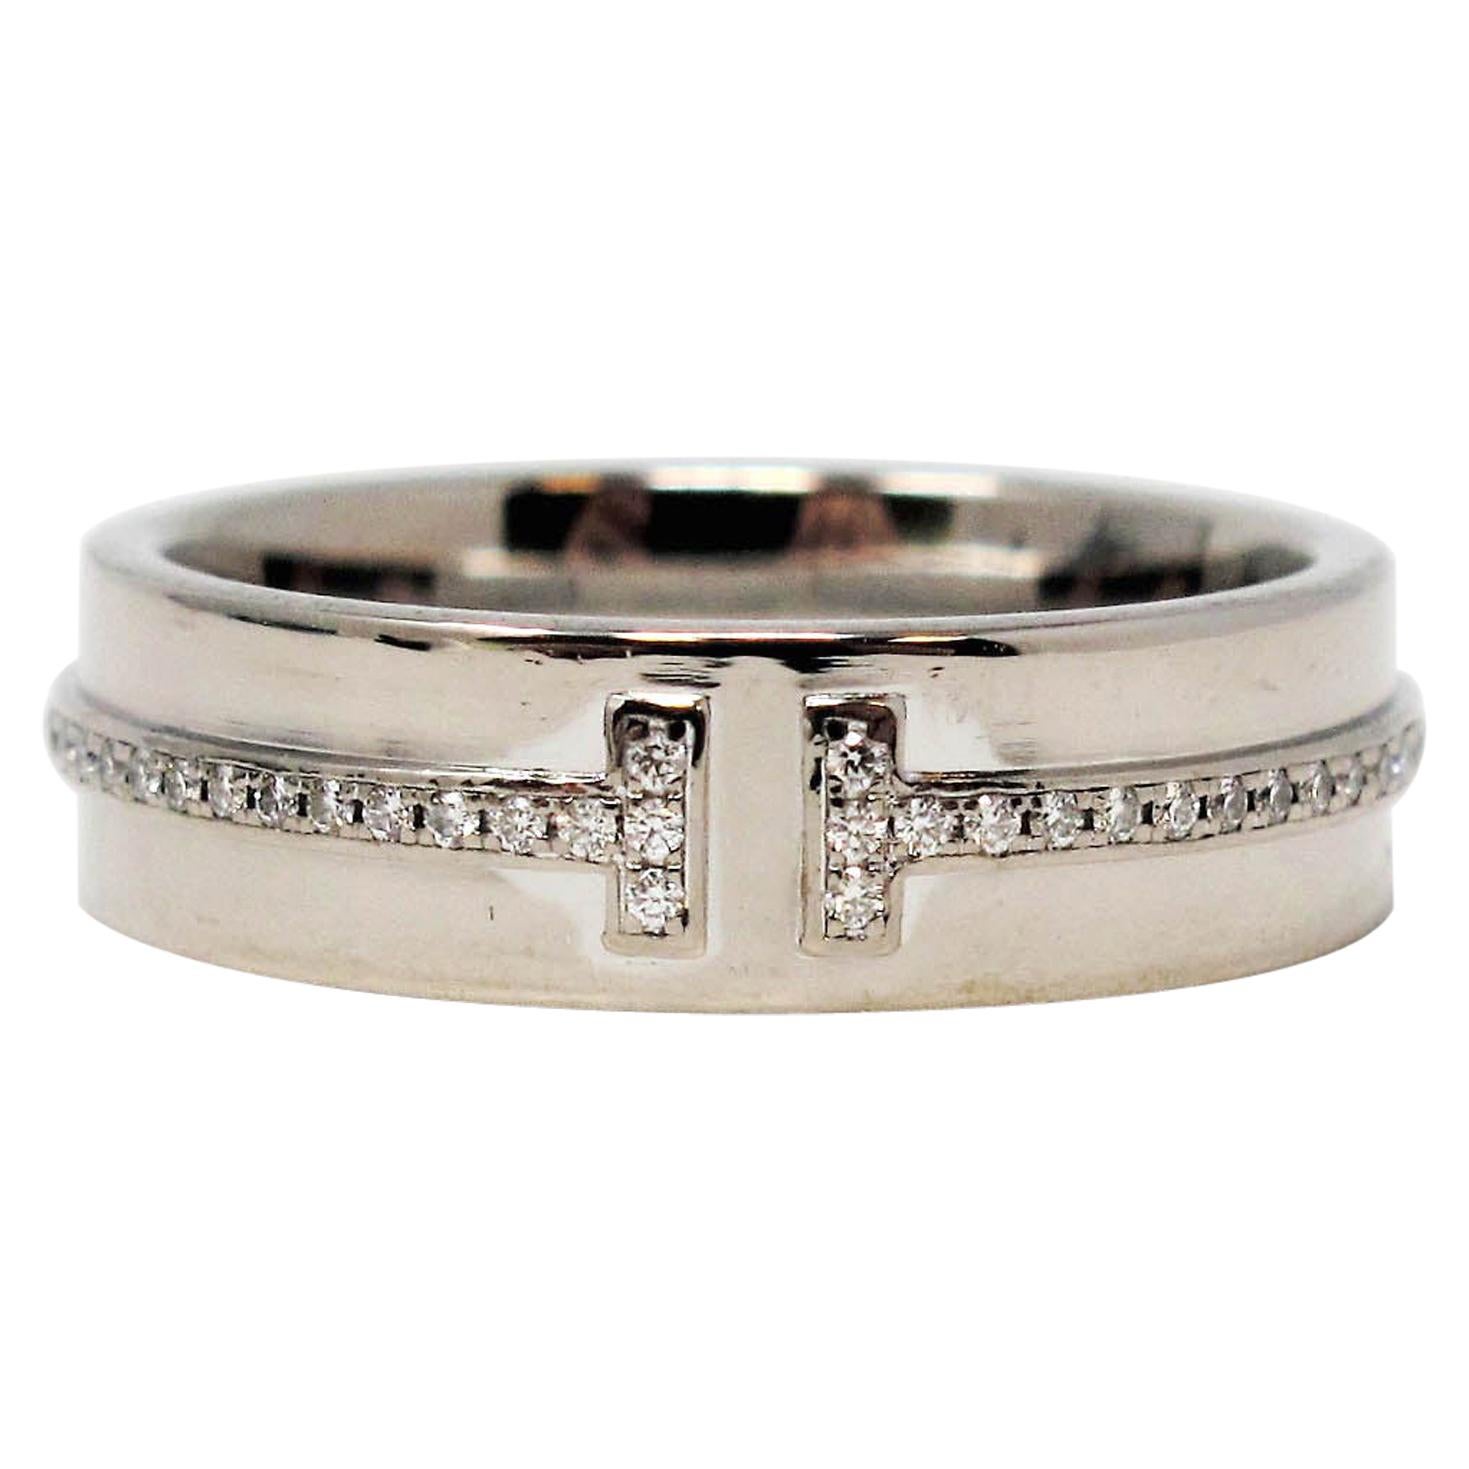 Tiffany & Co. Pave Diamond Tiffany T Band Ring in 18 Karat White Gold